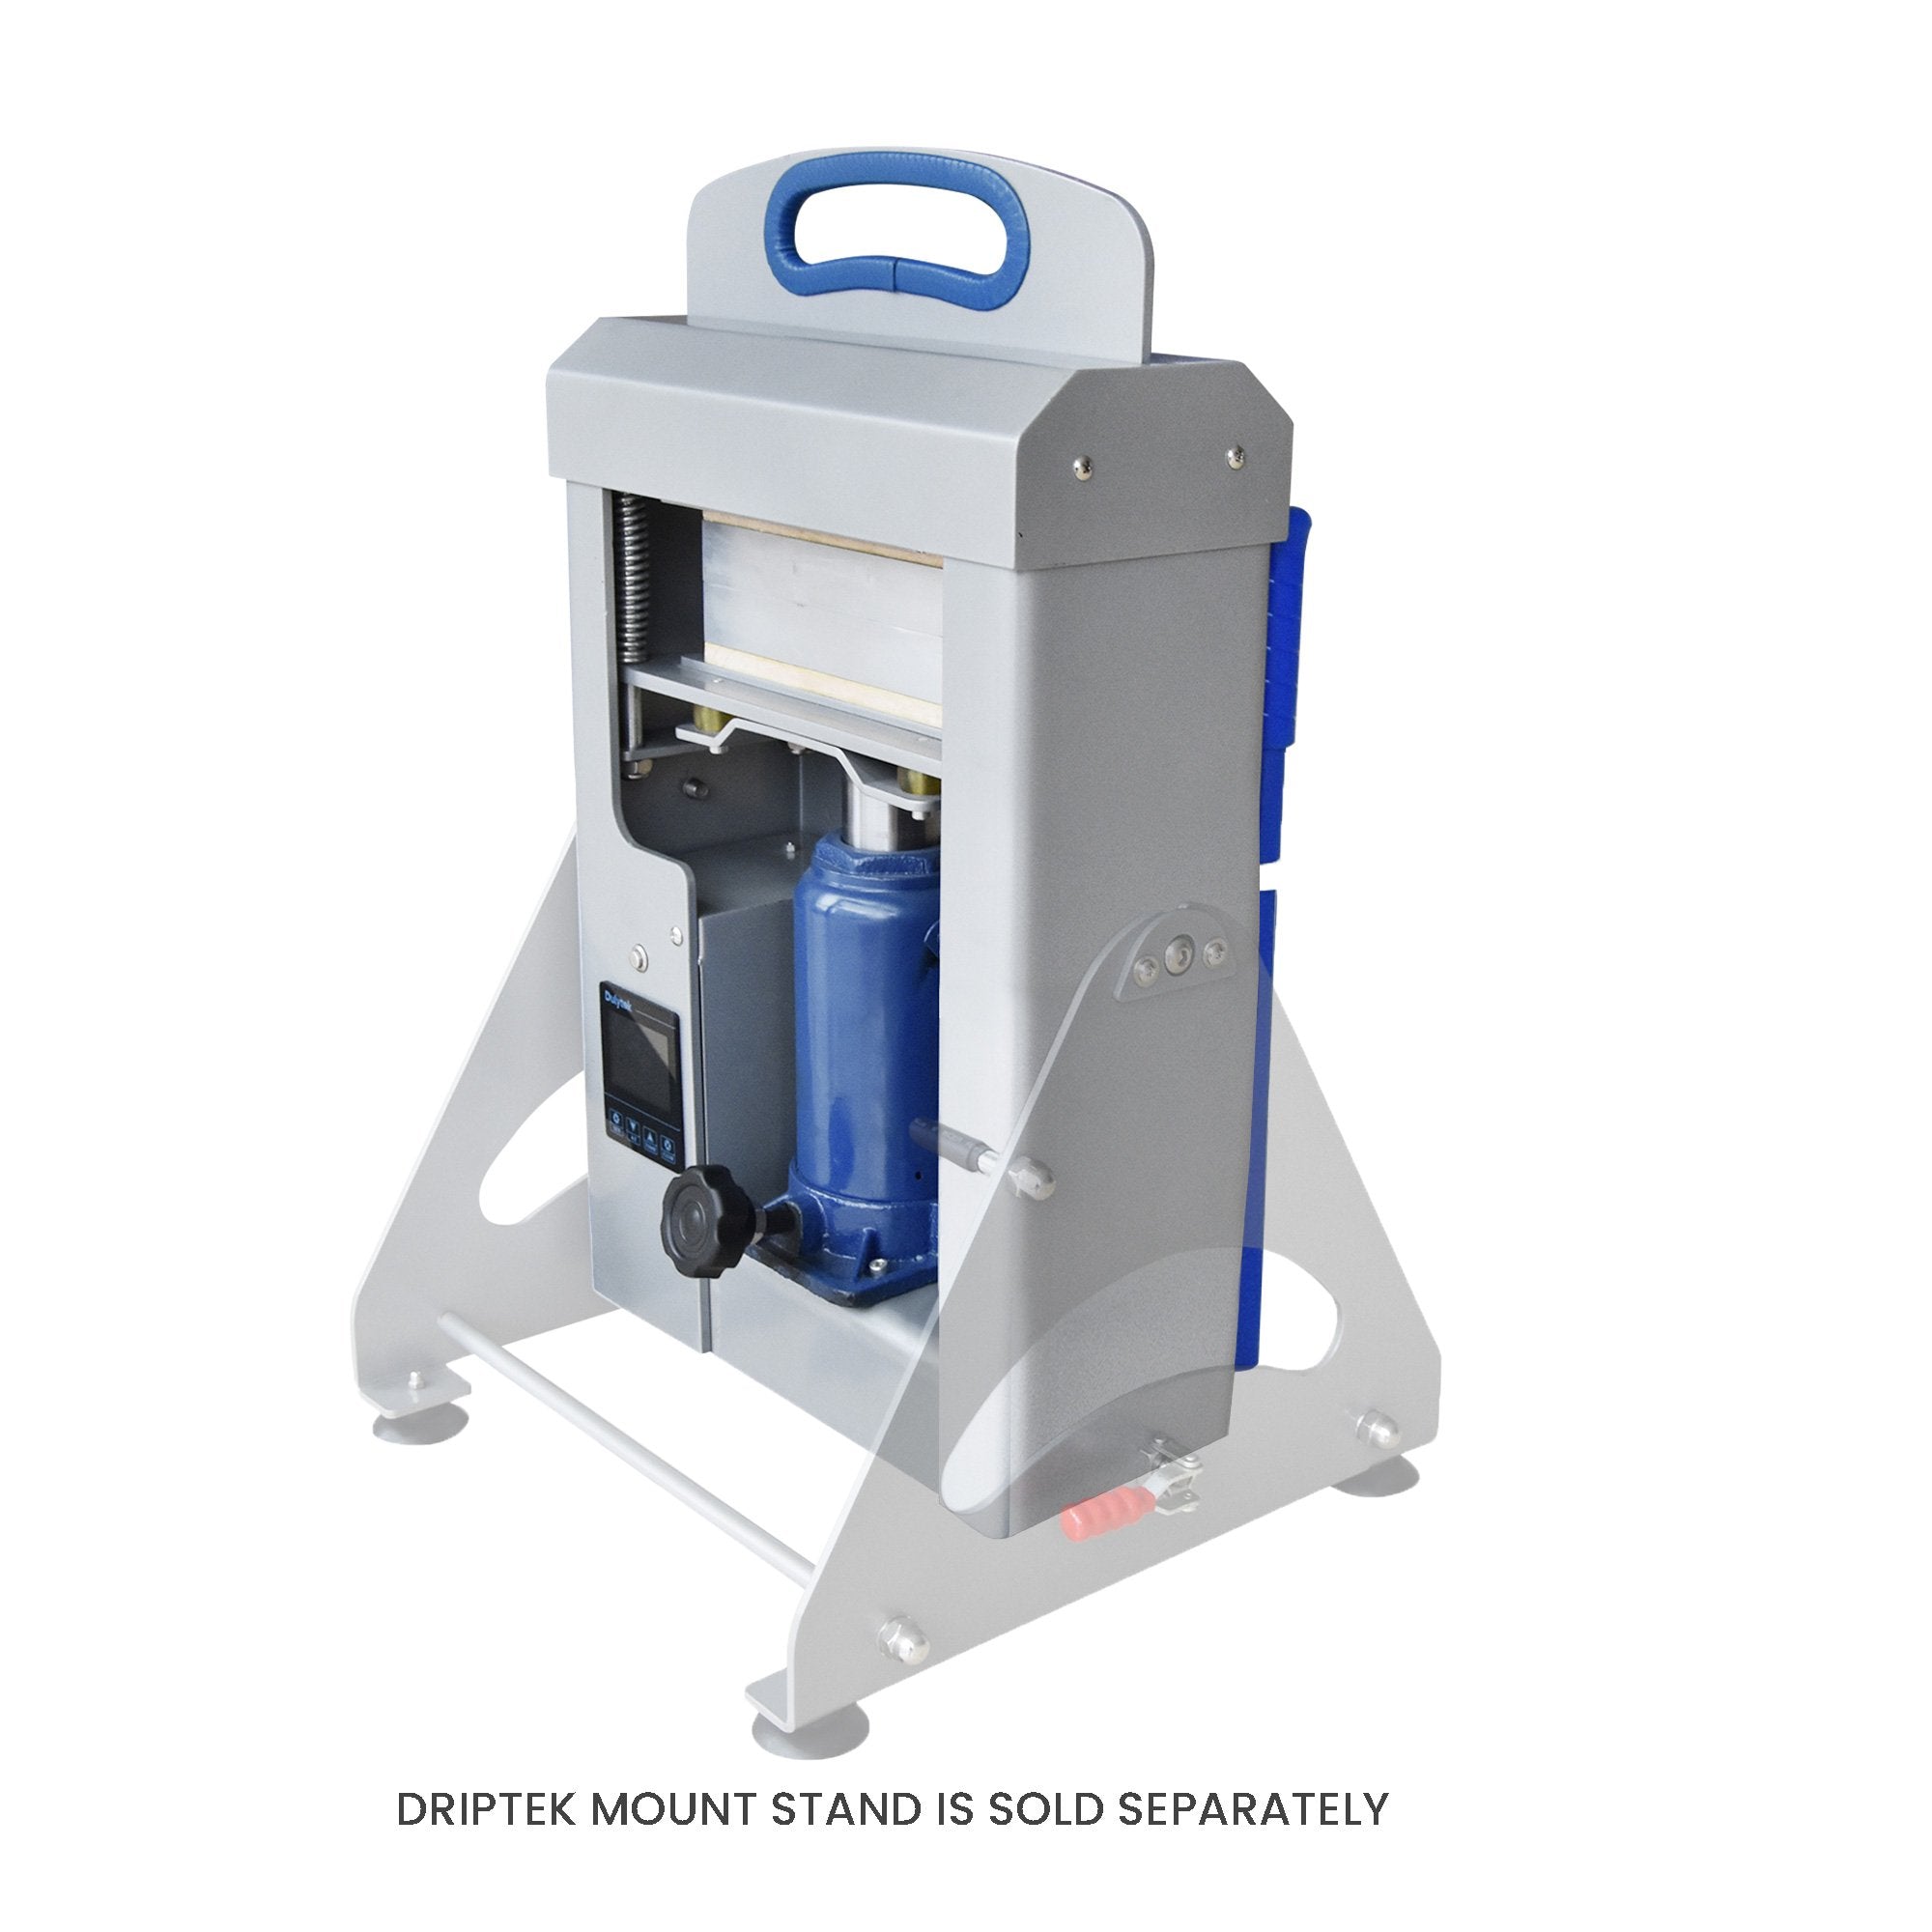 Dulytek DHP20 Hydraulic Rosin Heat Press with DripTek Mount